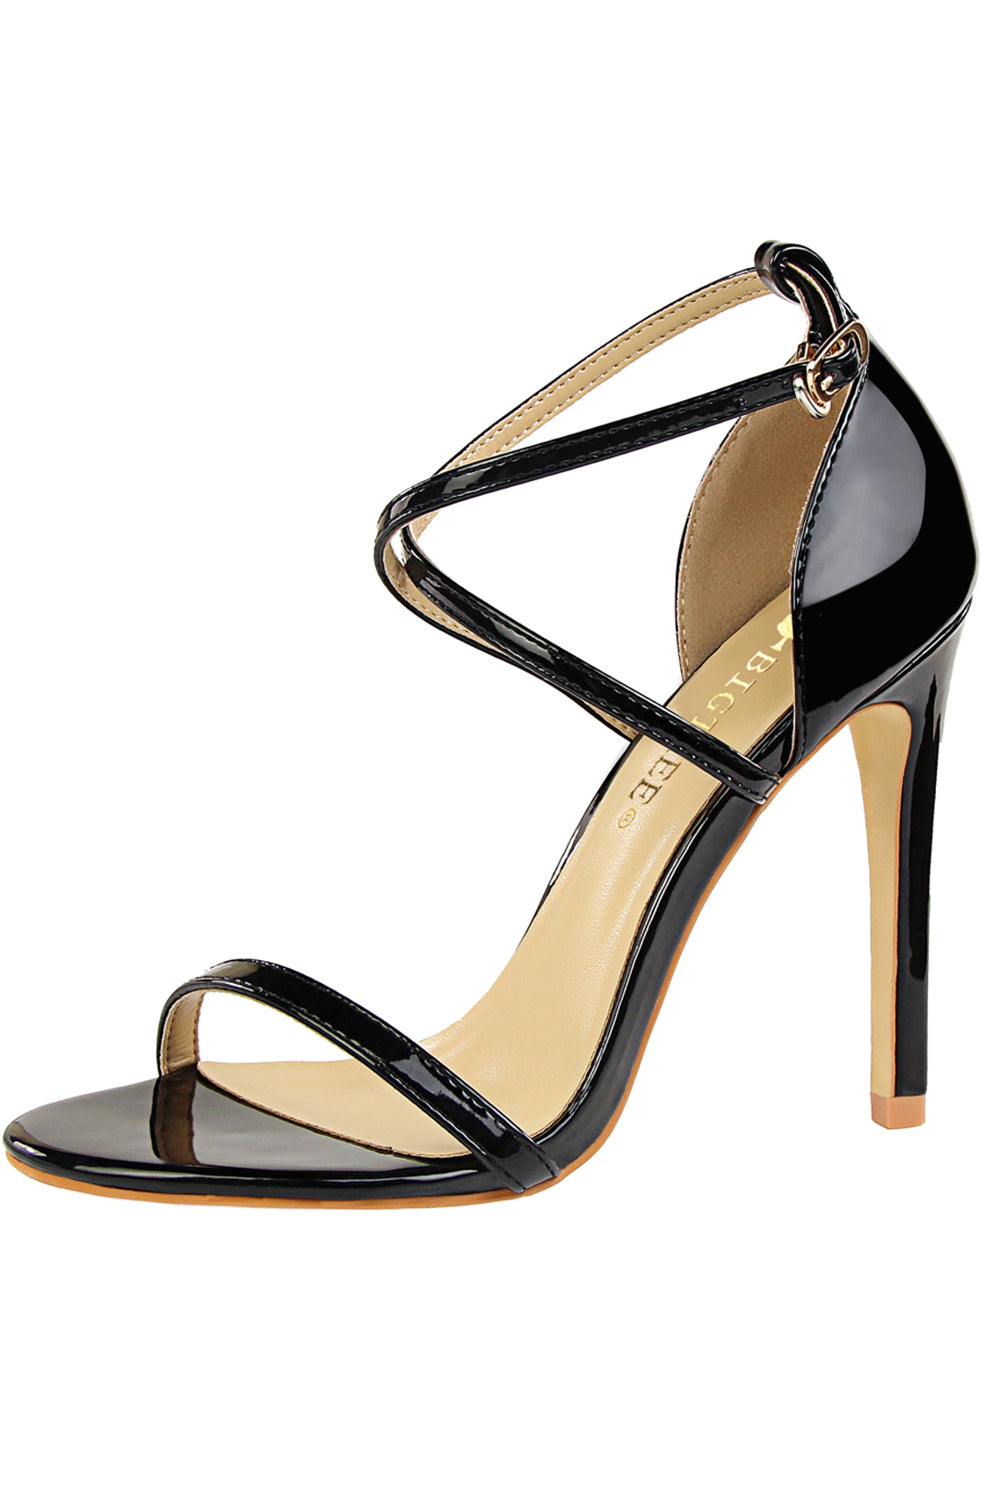 Mima Black Womens sz 8 Suede High Heel Open Toe Prom Shoes | eBay